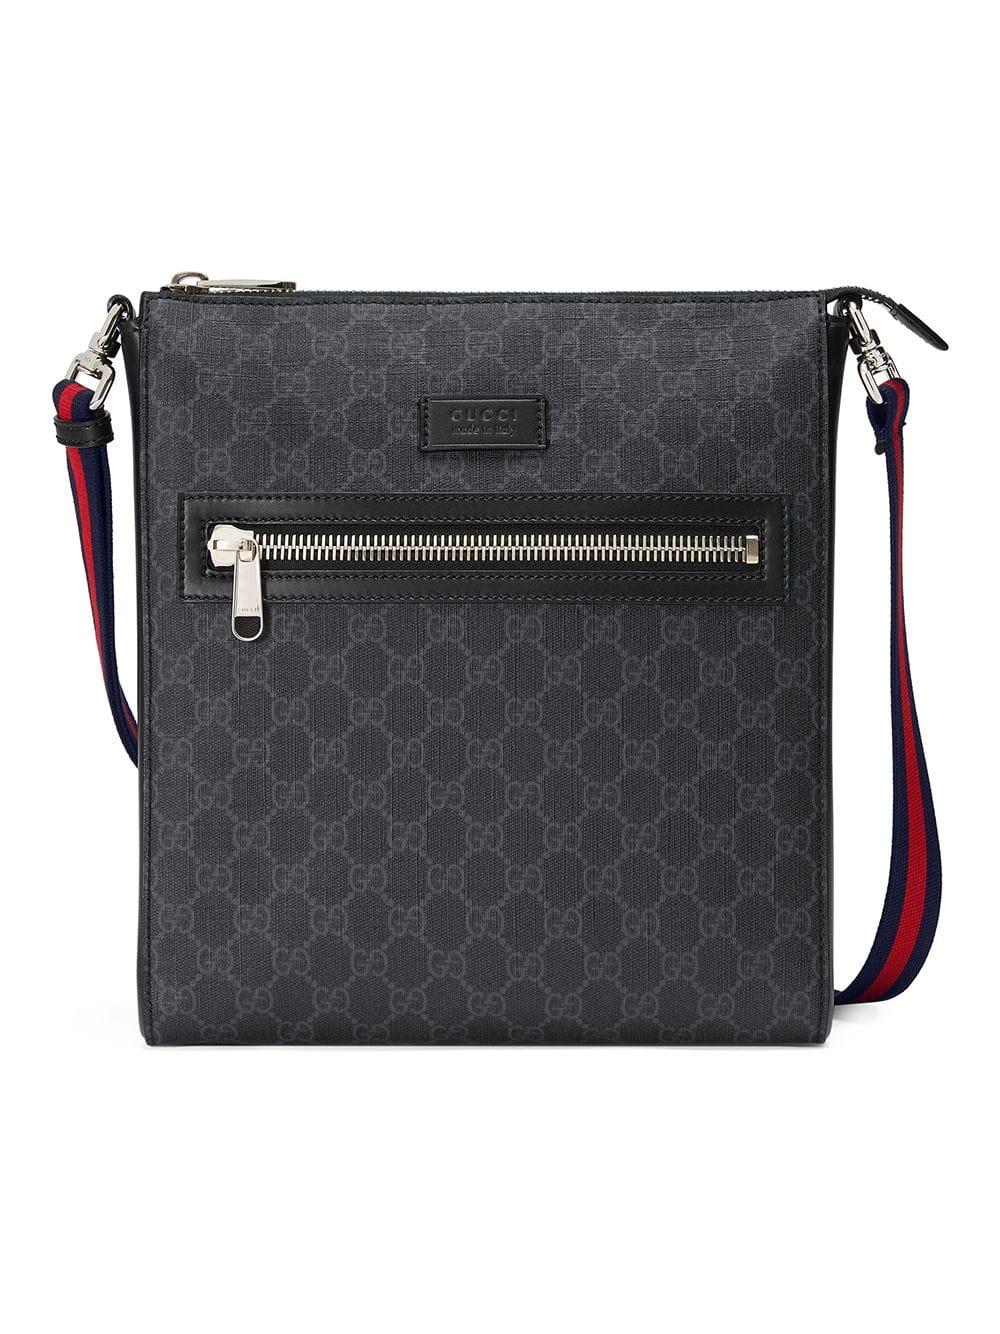 Gucci Canvas GG Supreme Messenger Bag in Black for Men - Save 6% - Lyst